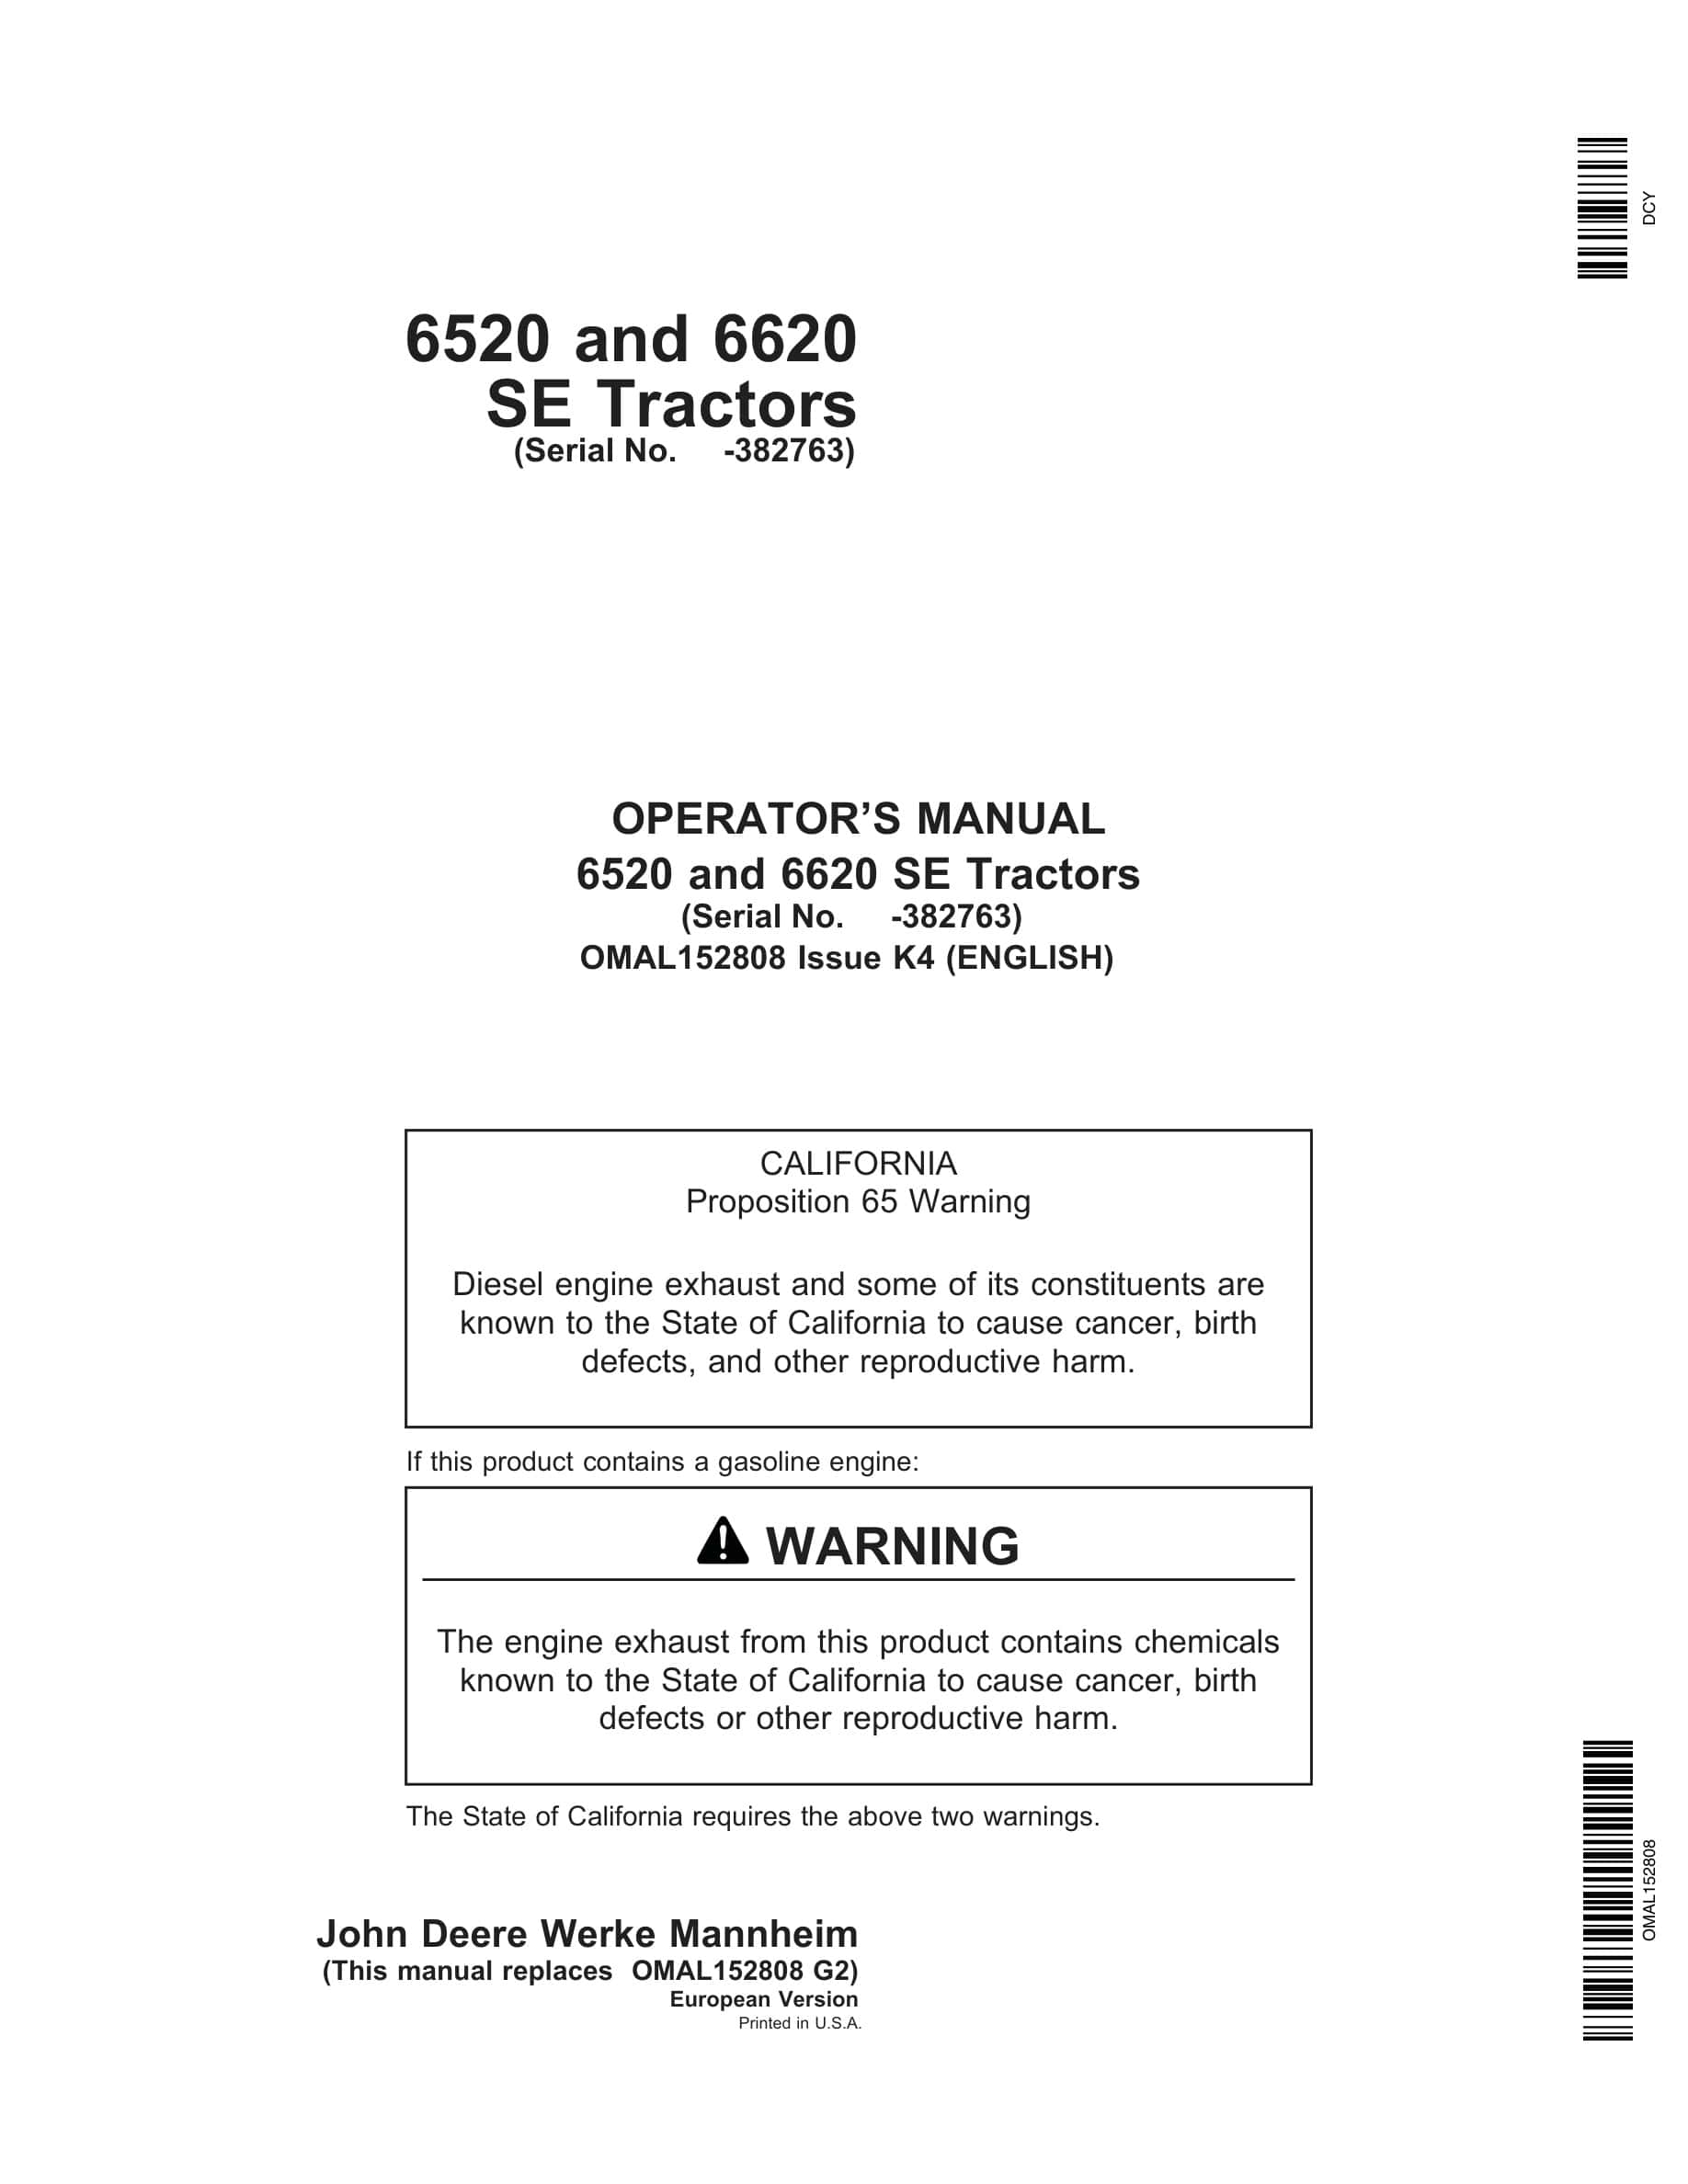 John Deere 6520 And 6620 Se Tractors Operator Manuals OMAL152808-1